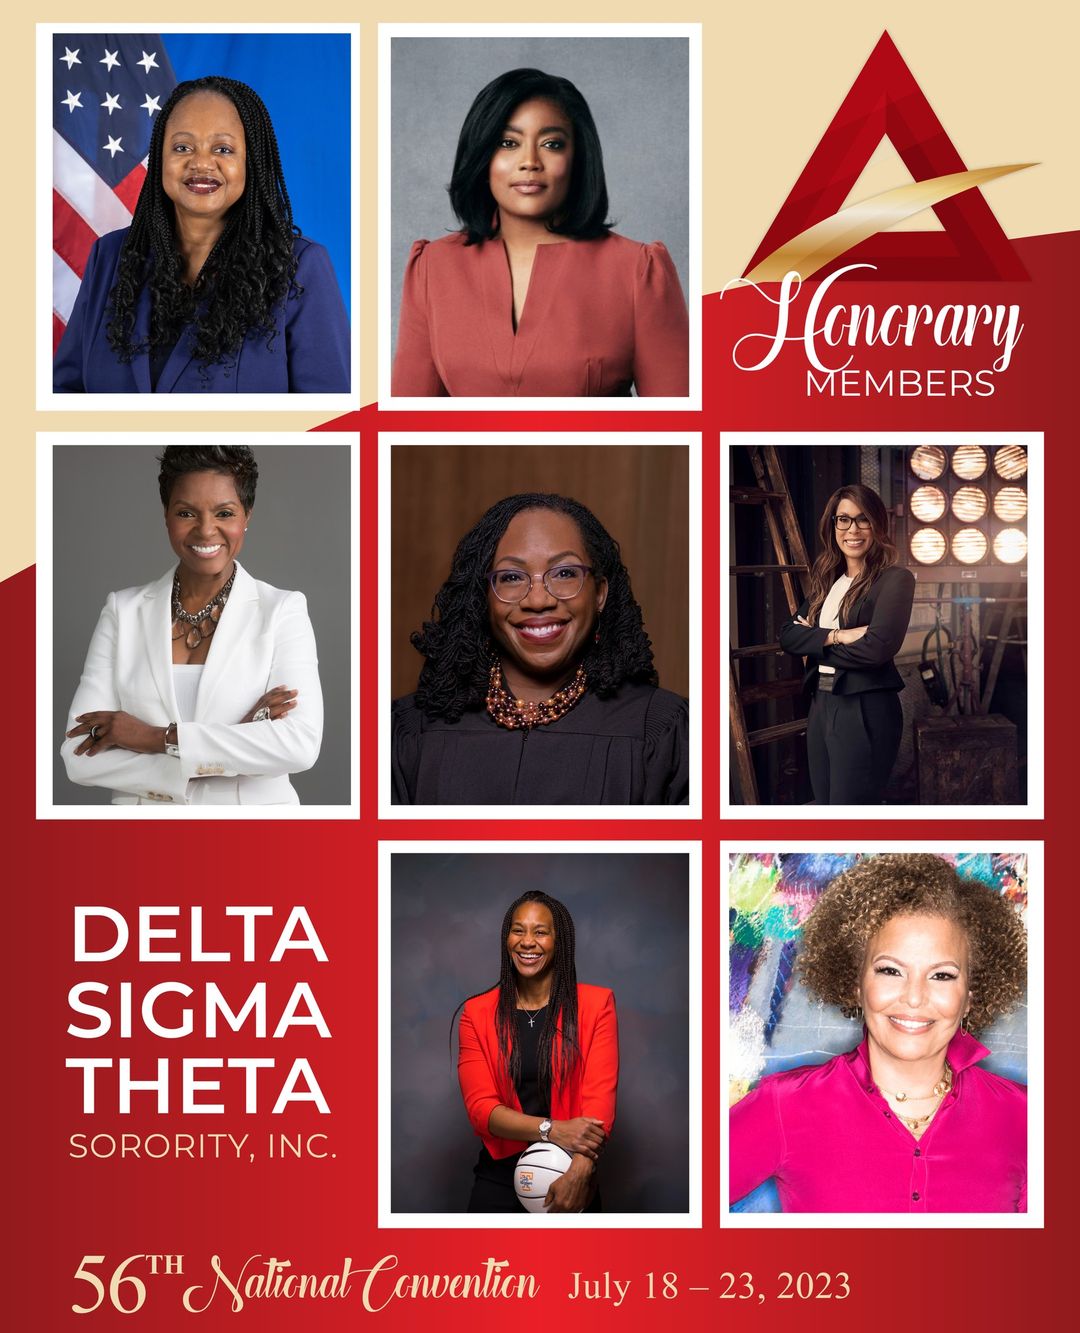 Celebrating the Newest Honorary Members of Delta Sigma Theta Sorority